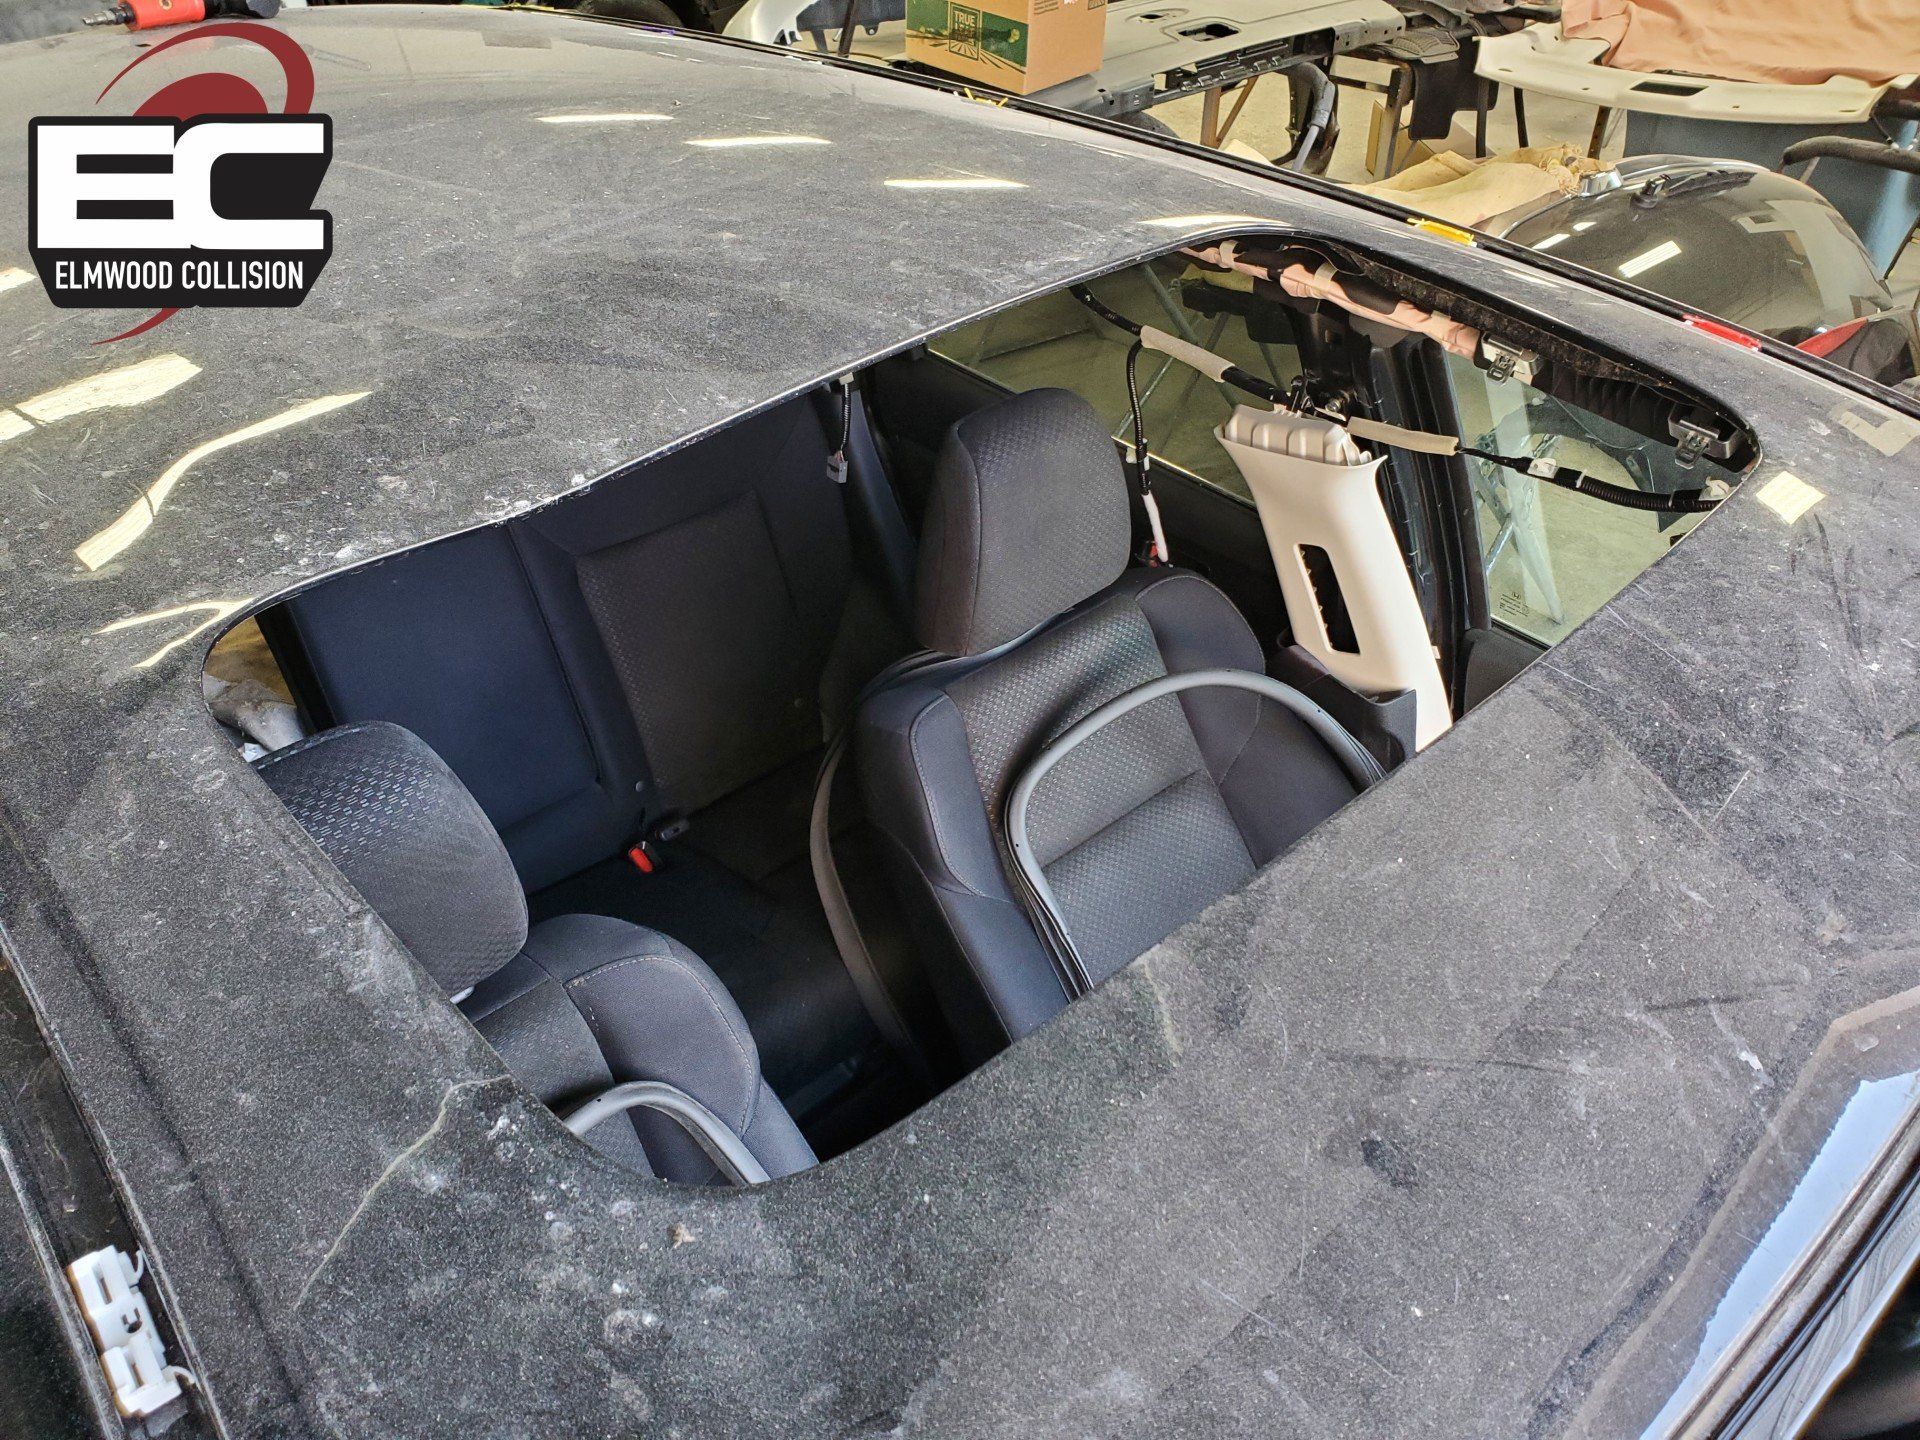 2015 Honda CR-V with broken sunroof removed